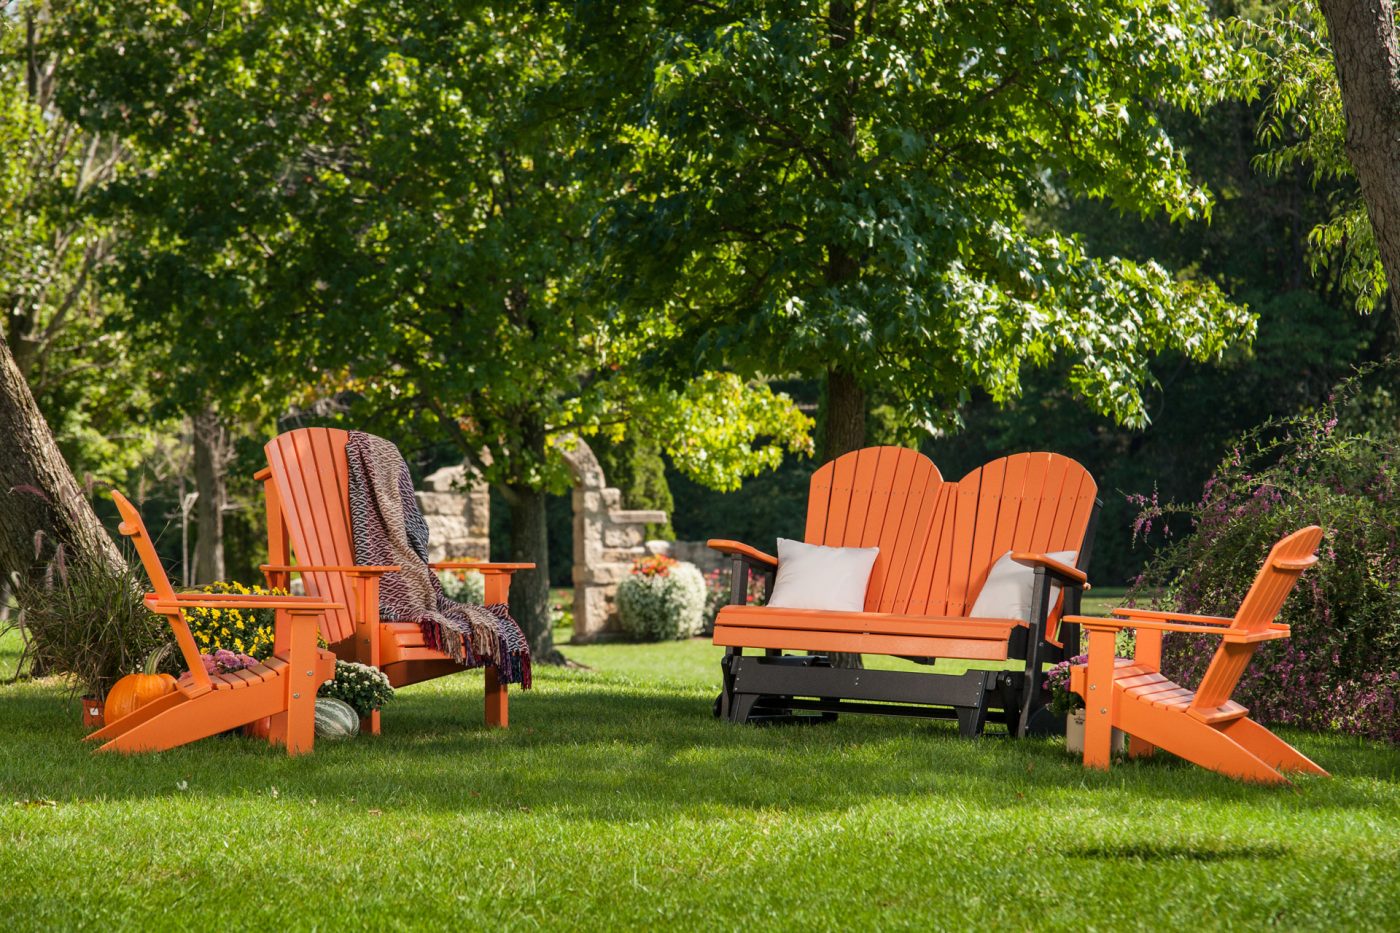 Adirondack Glider Tangerine and Black with Royal Adirondack Chair and Lakeside Adirondack Chairs